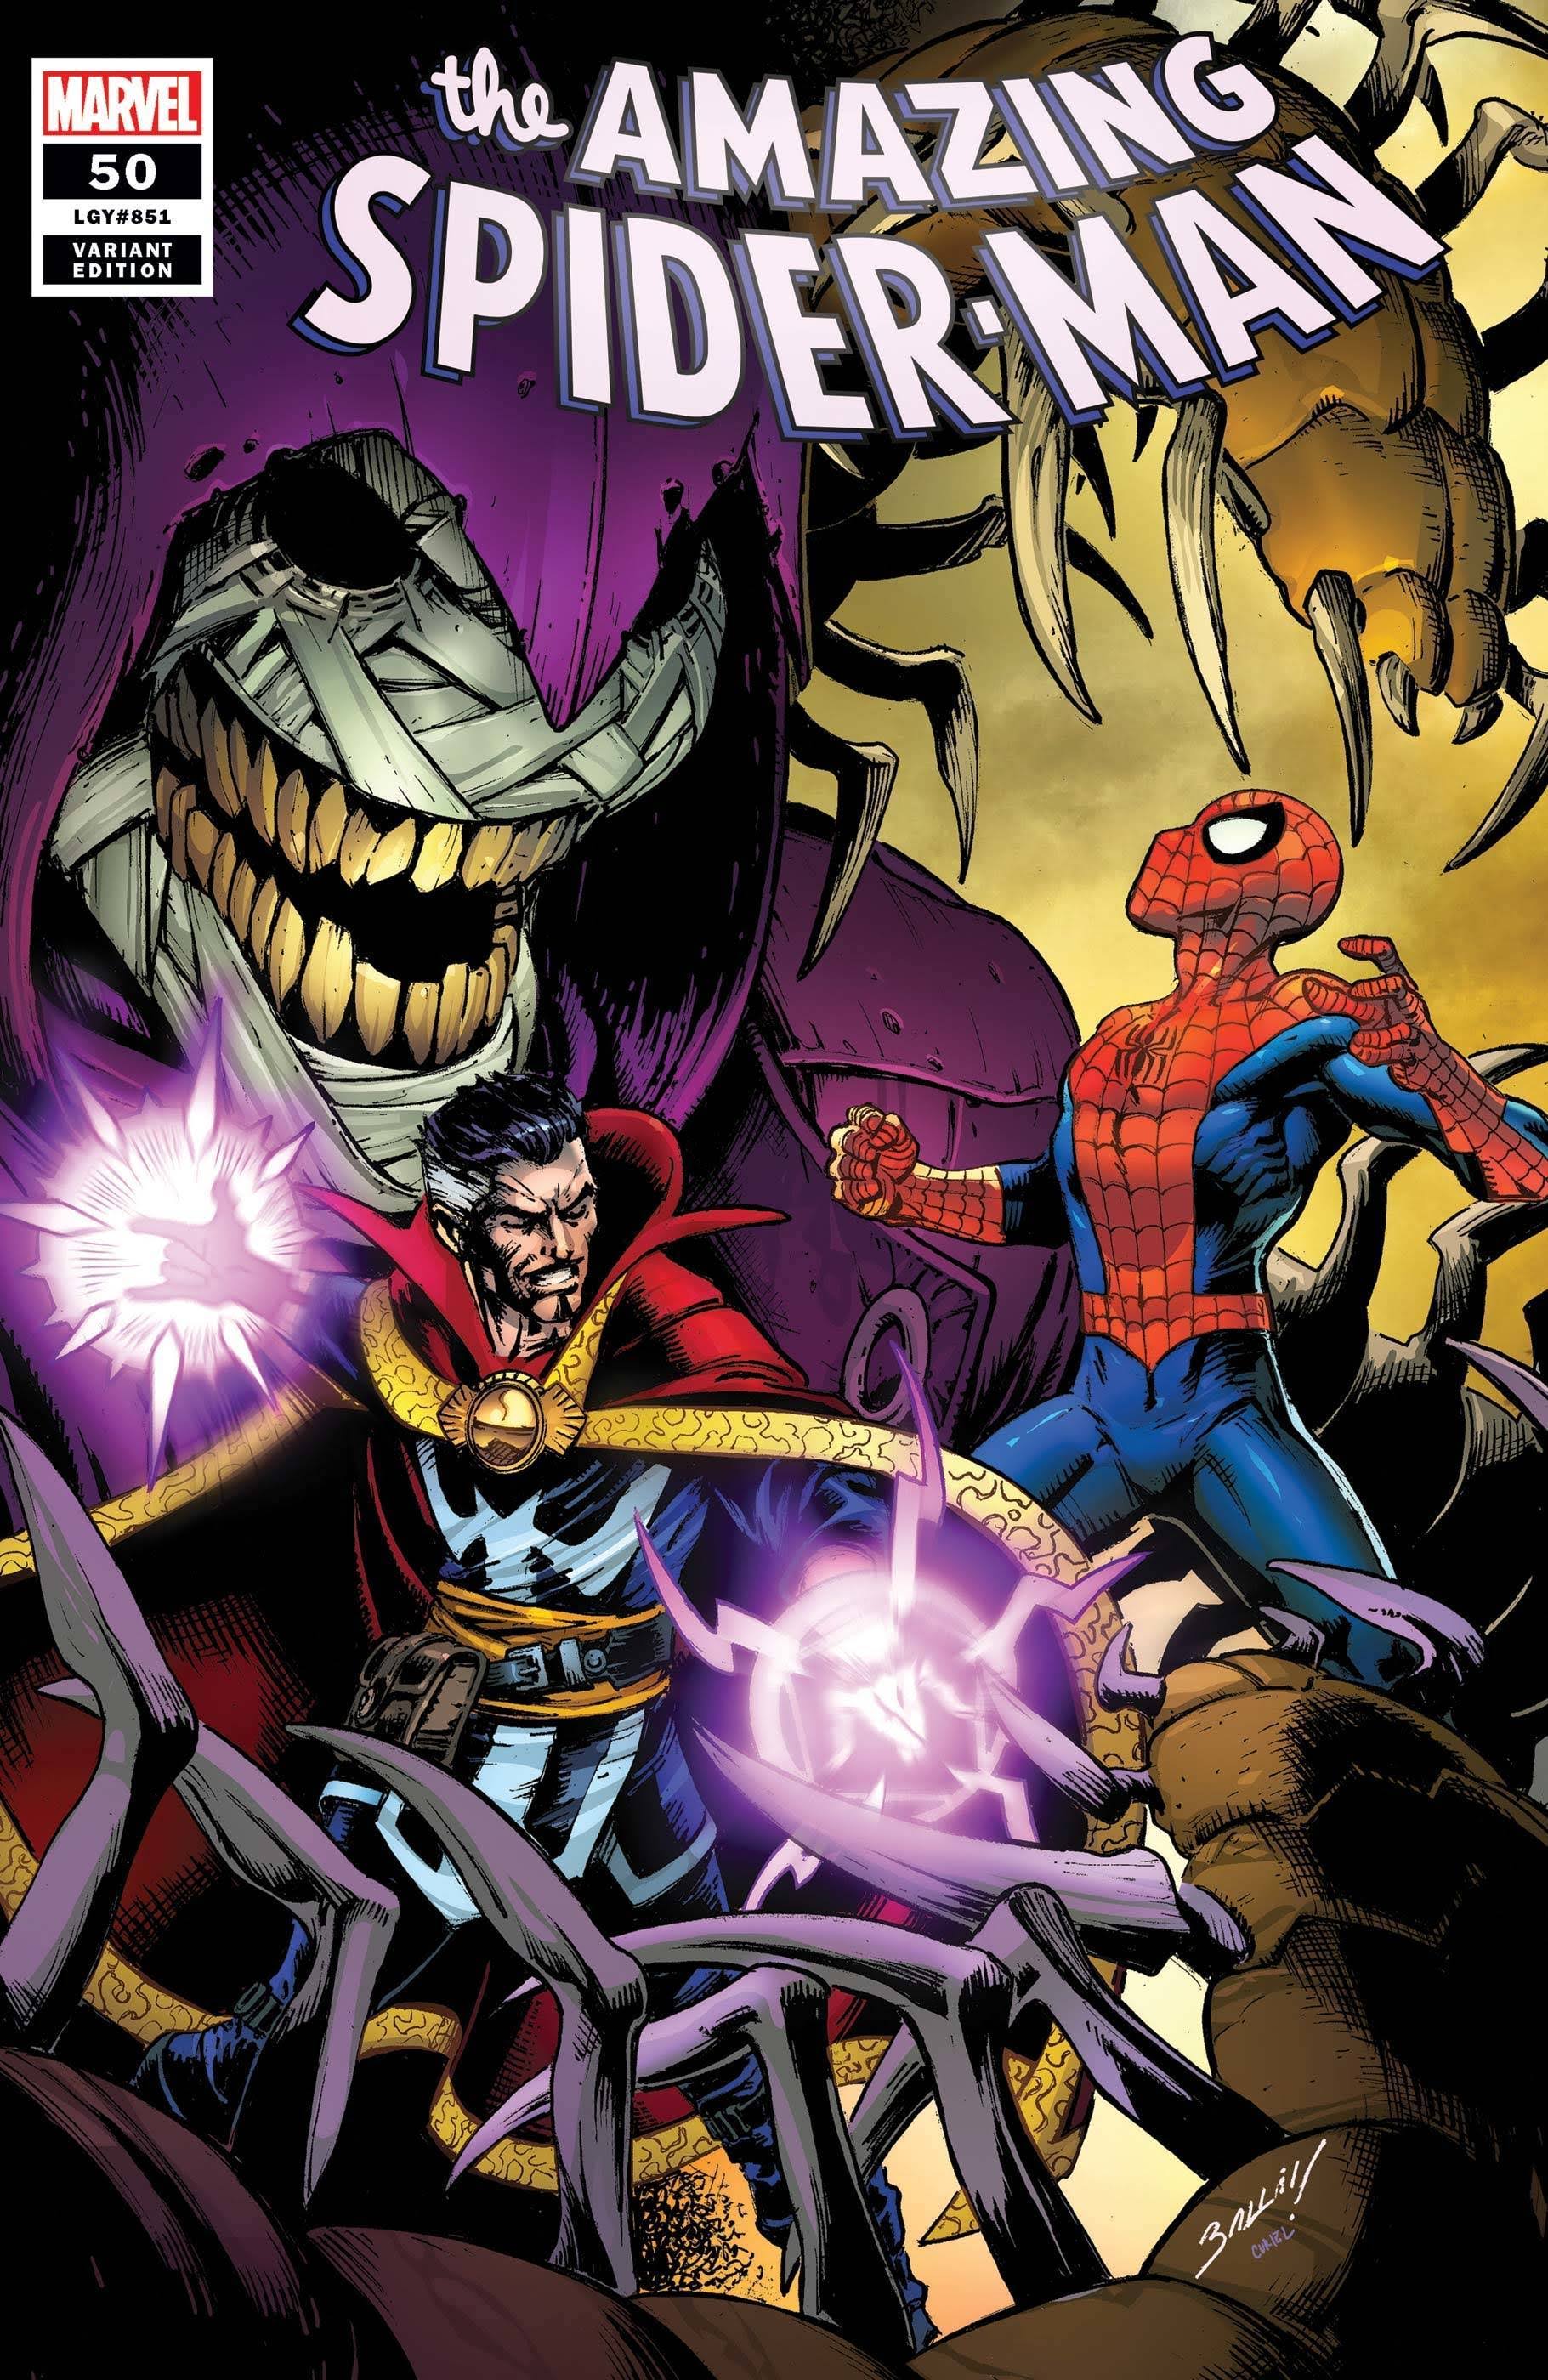 Spider-man #1 - Marvel Comics